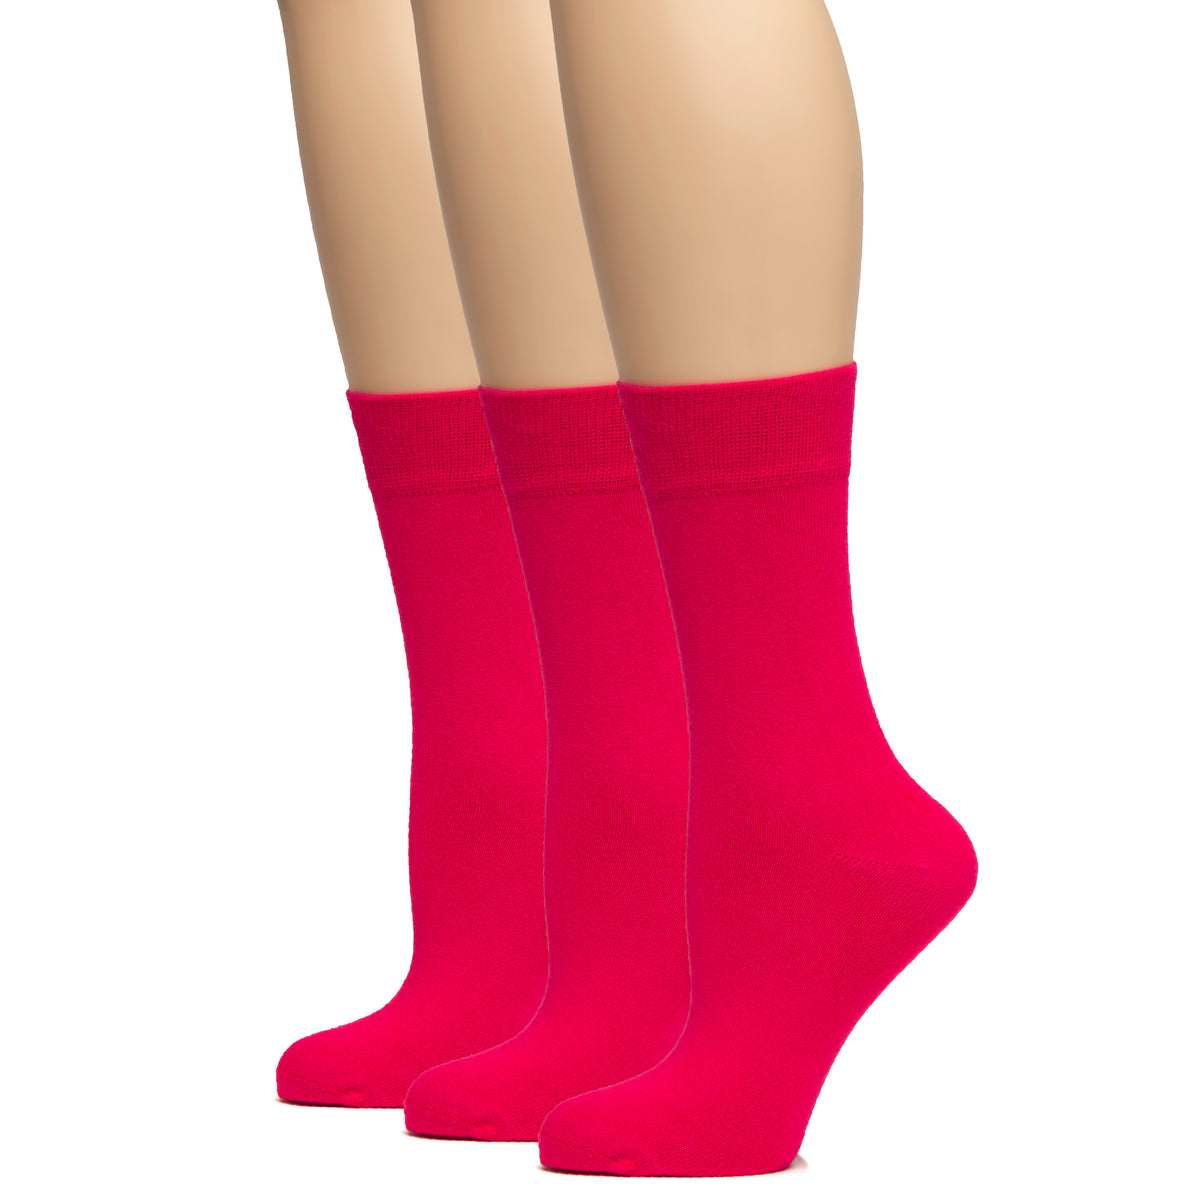 Hugh Ugoli Women's Bamboo Dress Socks Crew Soft Comfy Seamless Toe, 3 Pairs, Shoe Size: 5-8/9-11 | Shoe Size: 9-11 | Raspberry Red